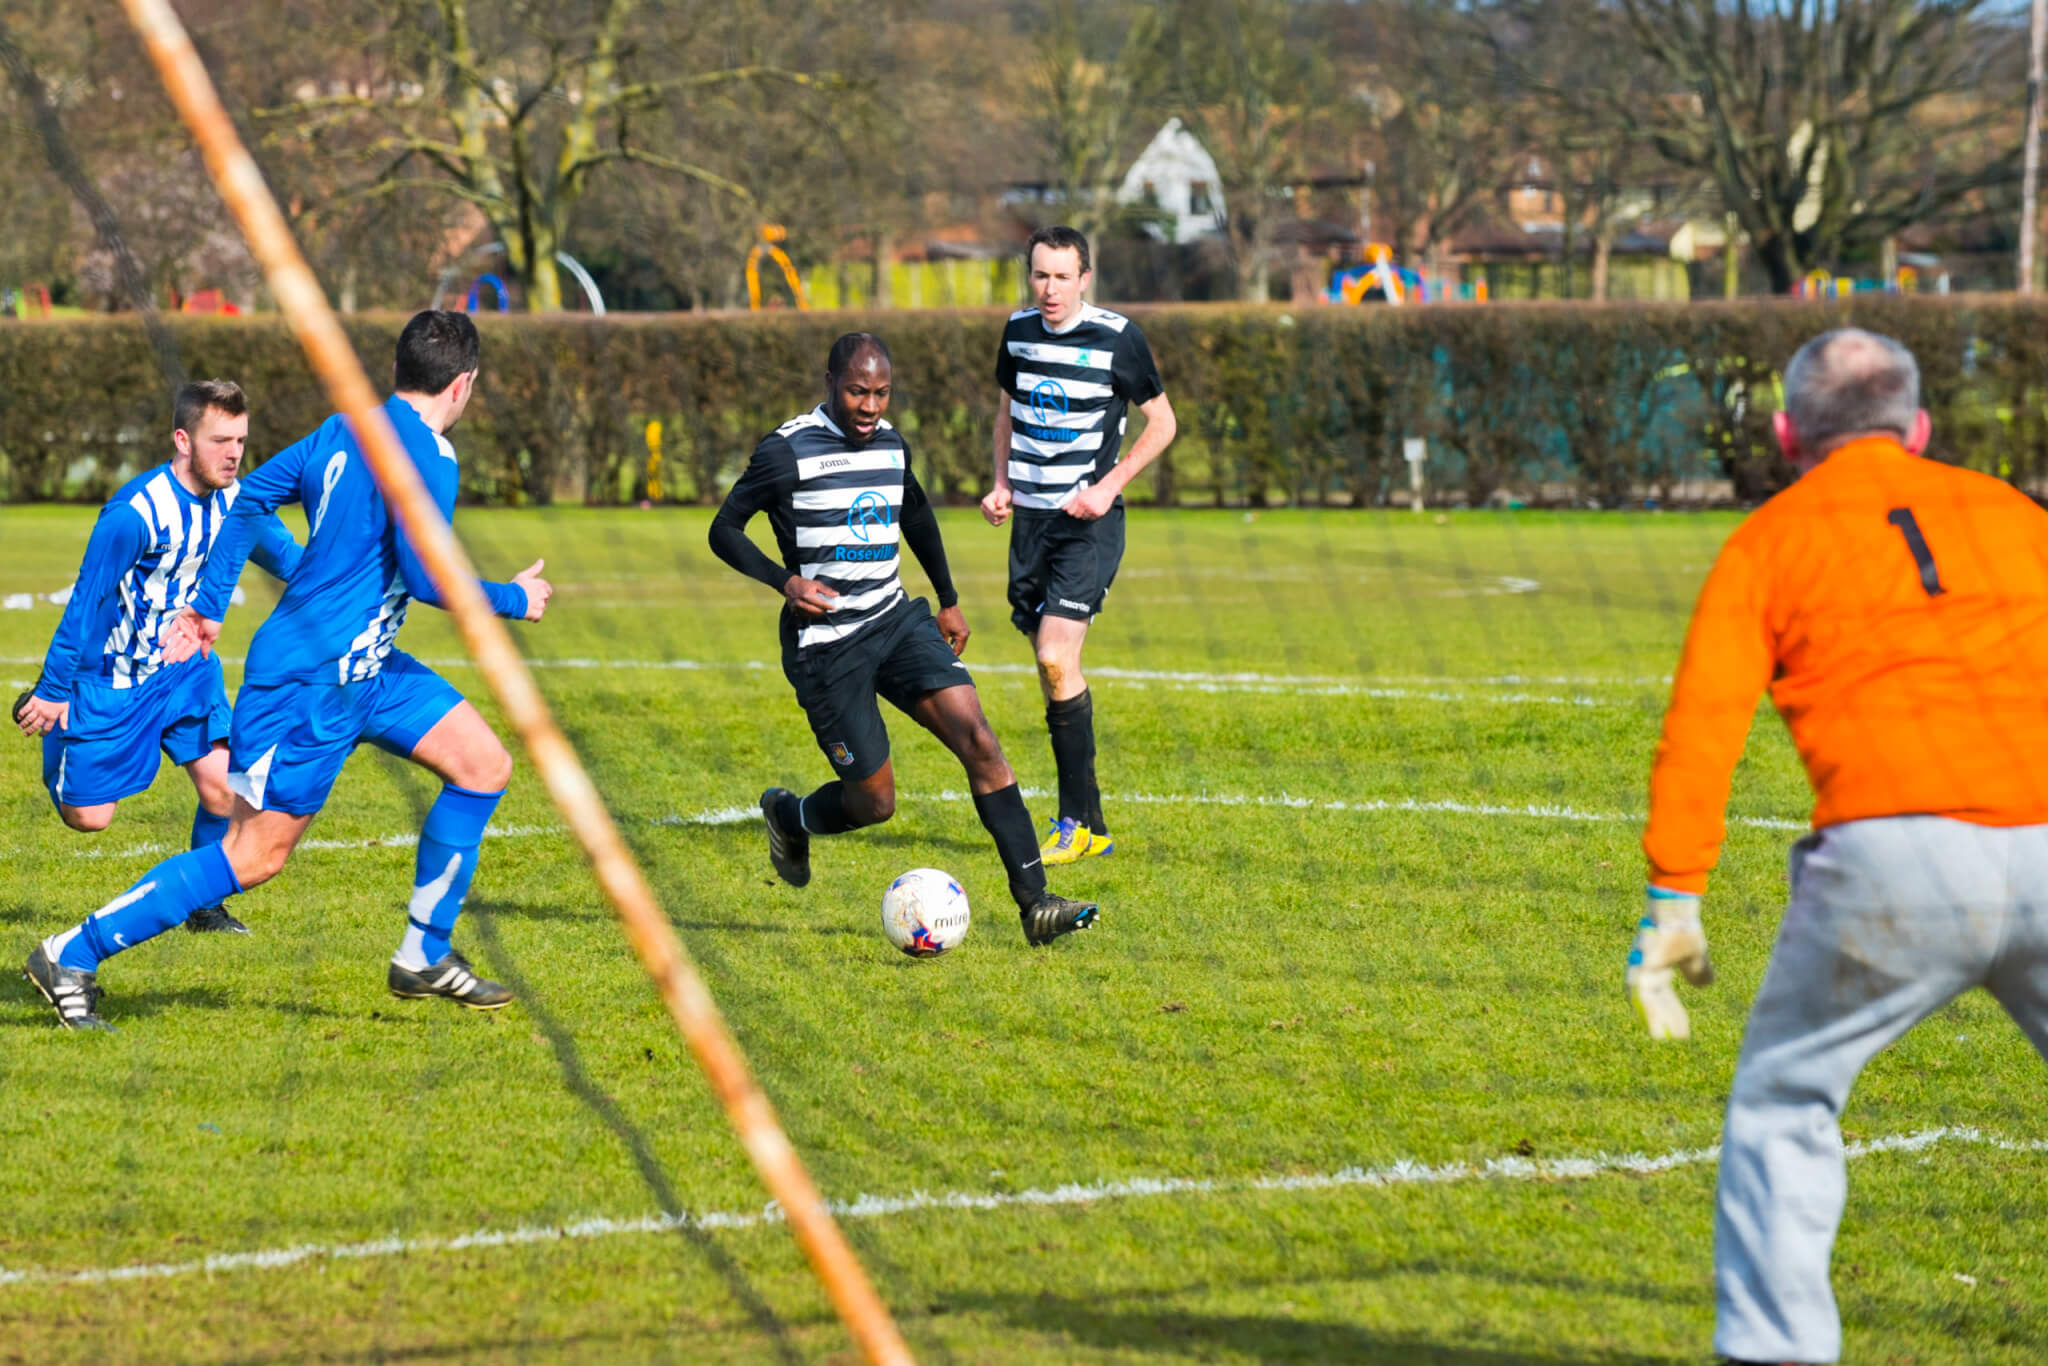 Football game Fairlop Oak Playing Field orange goalkeeper